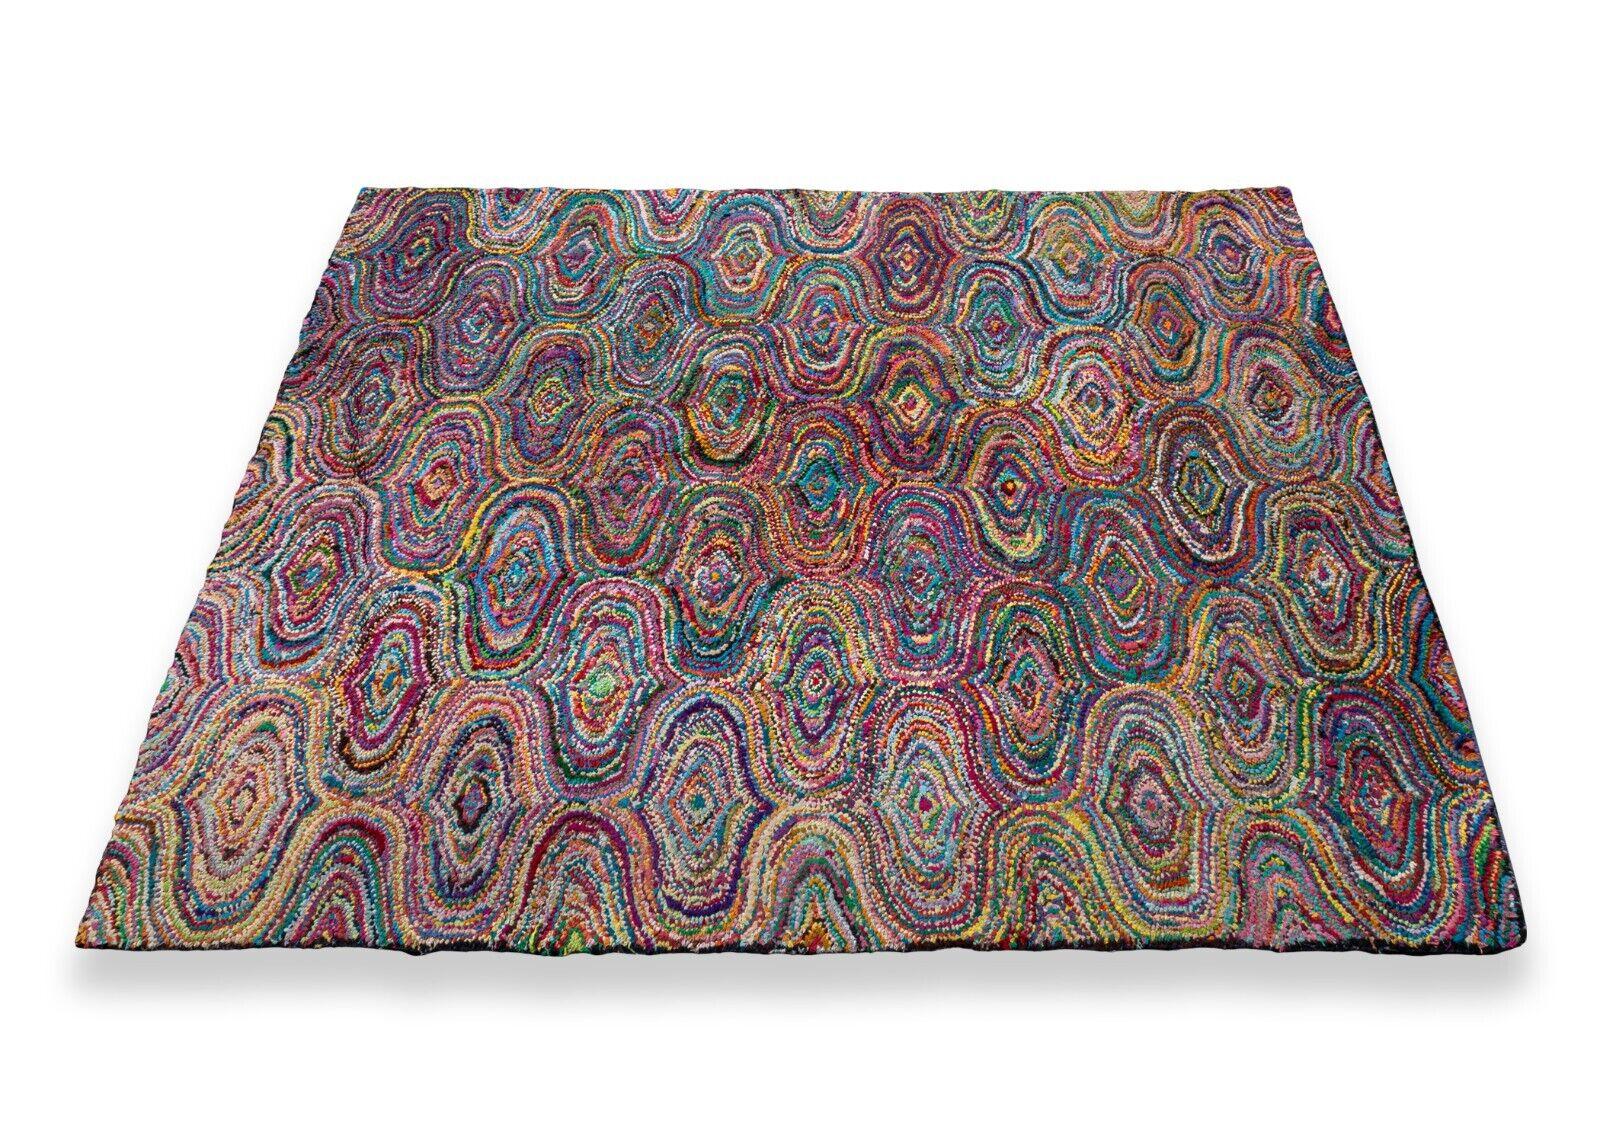 Swedish hand hooked vintage rag rug 1970's pop op art colors. In great condition. 9feet x 7 feet.